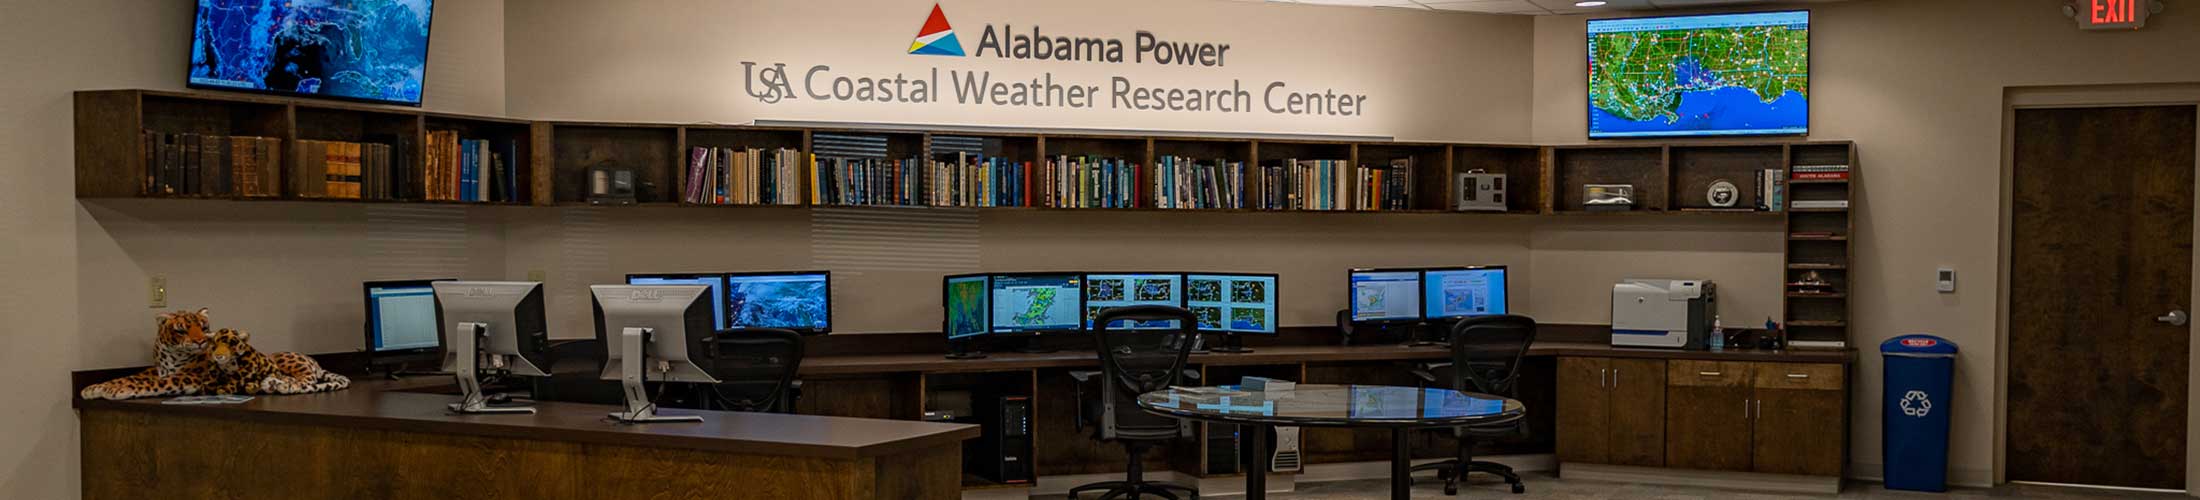 Alabama Power-新澳门六合彩开奖记录 Coastal Weather Research Center office displaying monitors.